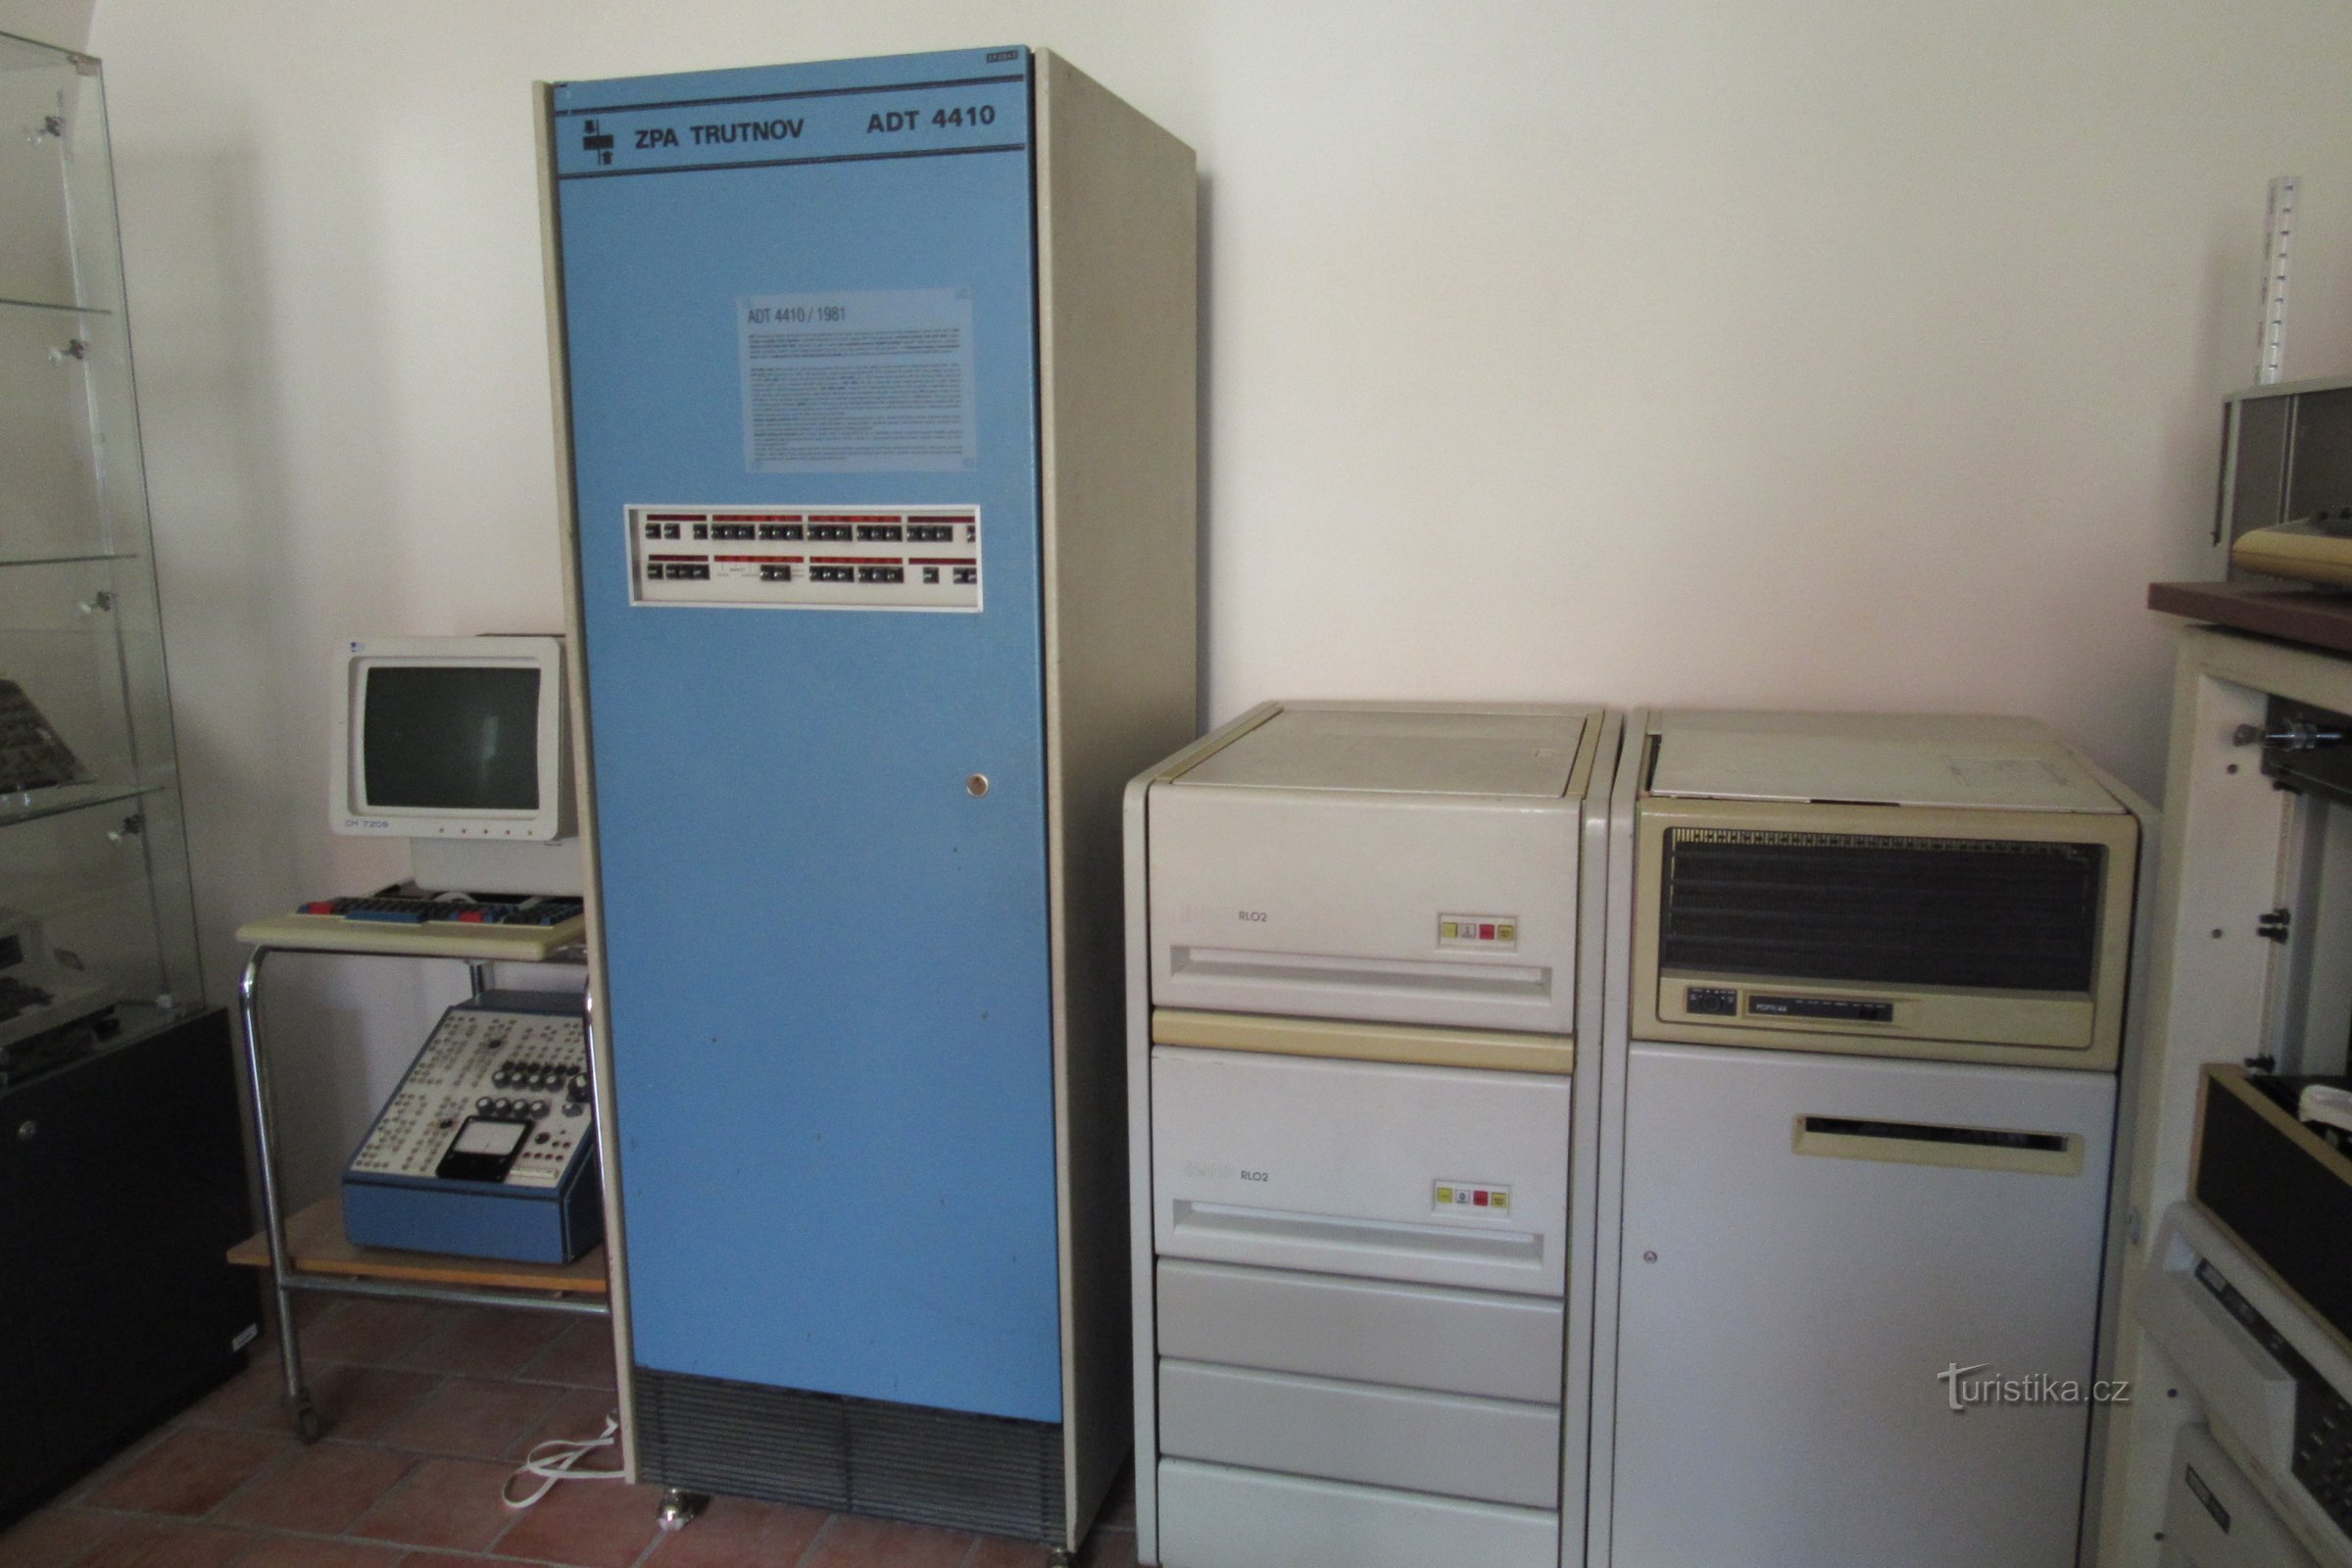 Système informatique ADT 4410